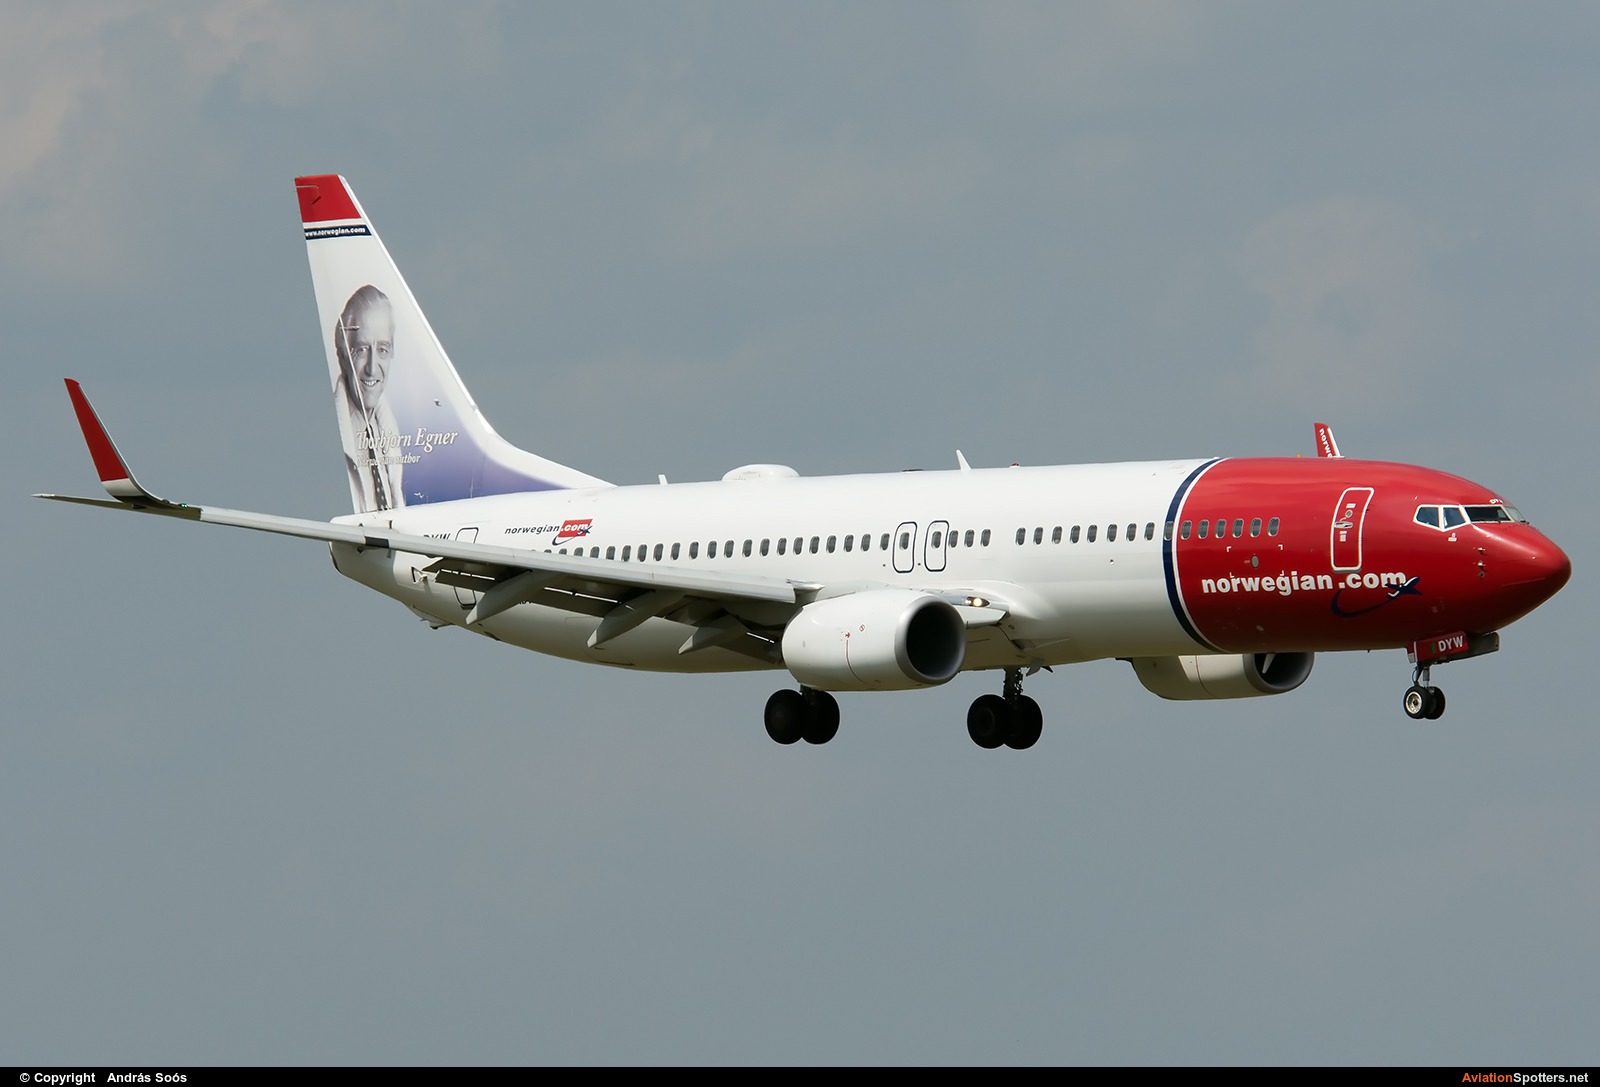 Norwegian Air Shuttle  -  737-800  (LN-DYW) By András Soós (sas1965)